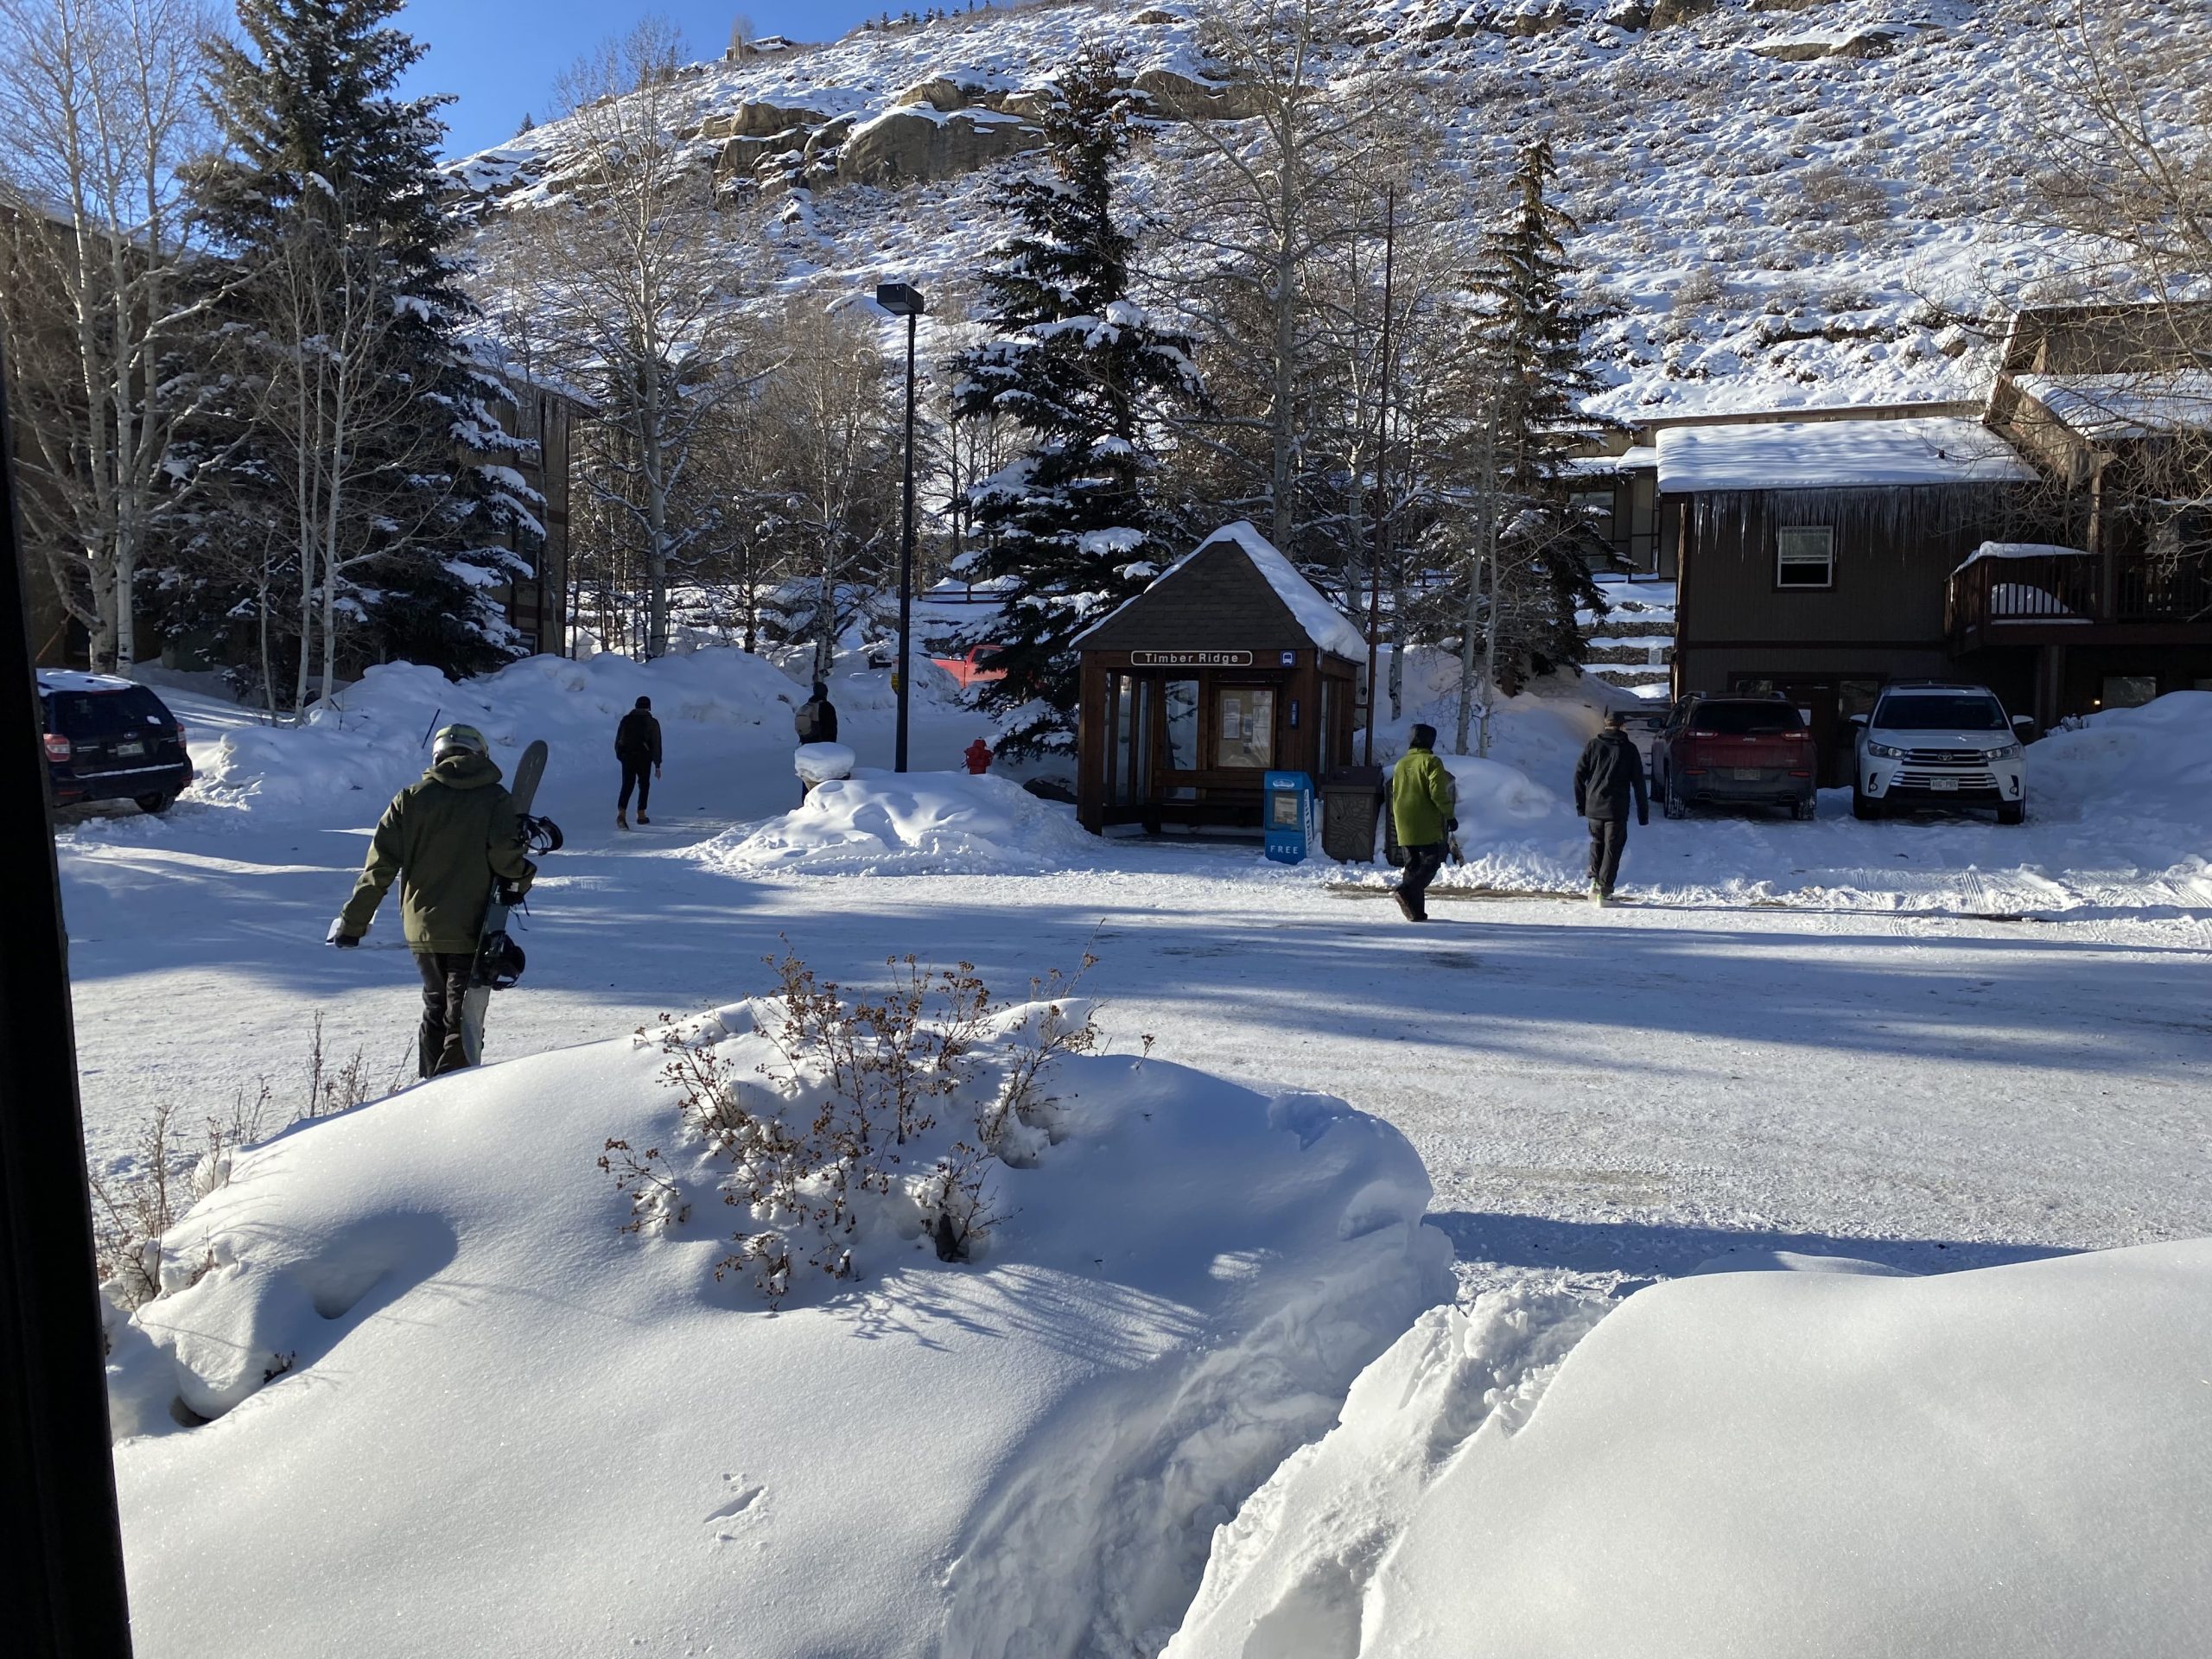 Employee housing in ski towns